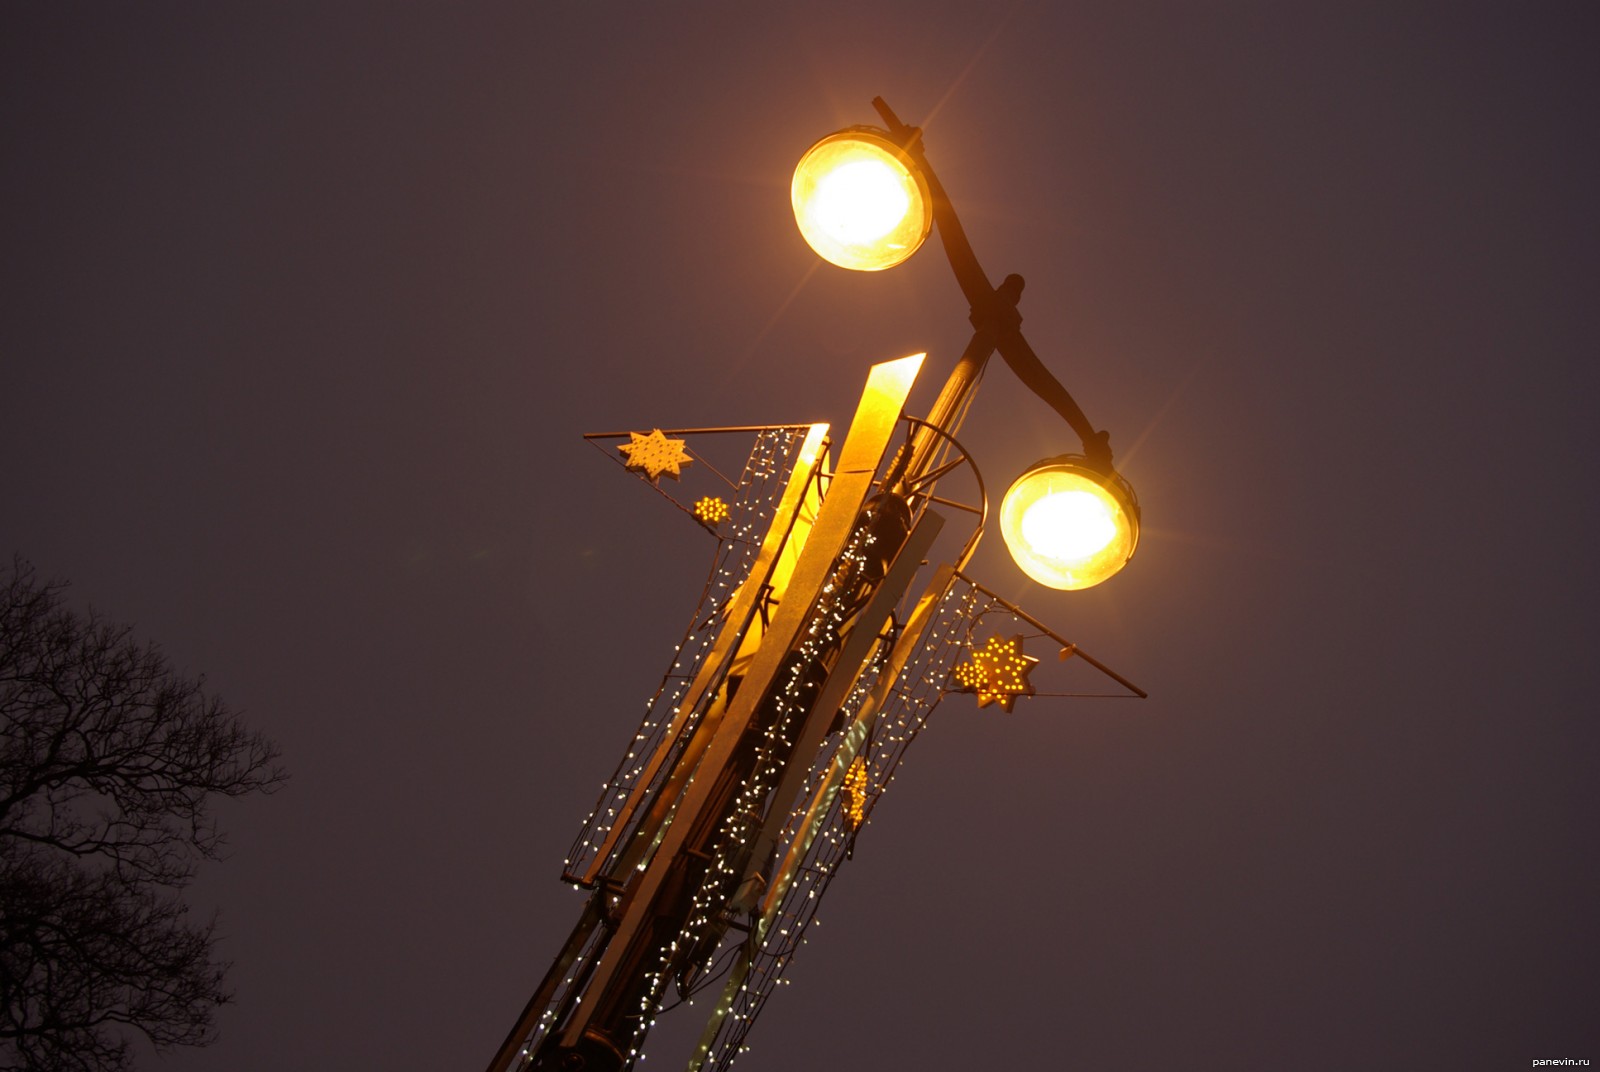 Конкурс фонари петербурга. Уличные фонари Петербурга. Фонари Петербурга новый год. Питер фонари ночь горизонтальное фото.